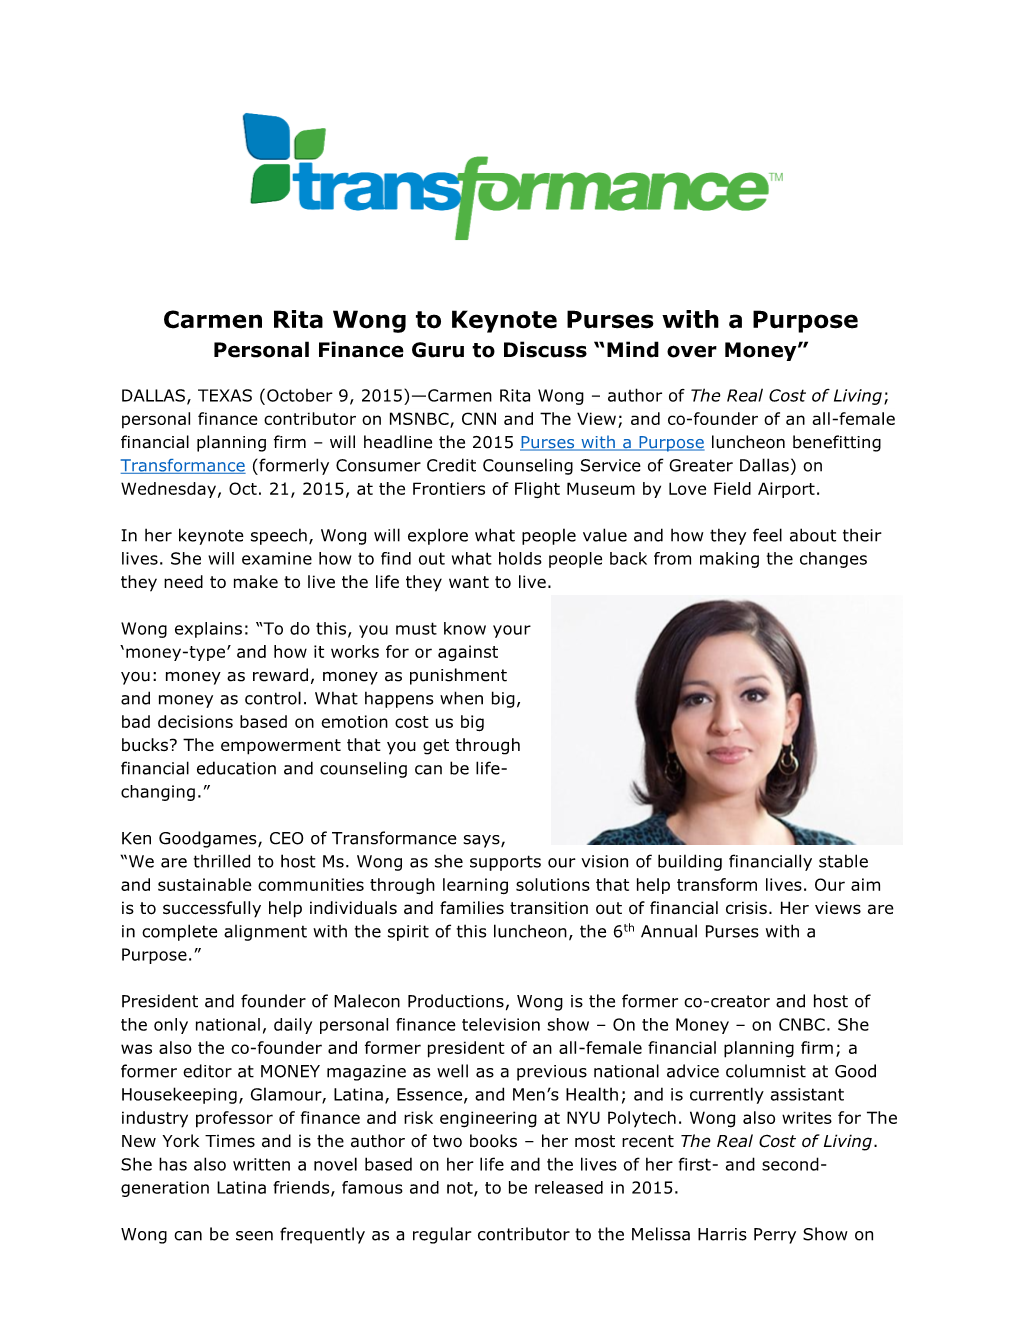 Carmen Rita Wong to Keynote Purses with a Purpose Personal Finance Guru to Discuss “Mind Over Money”